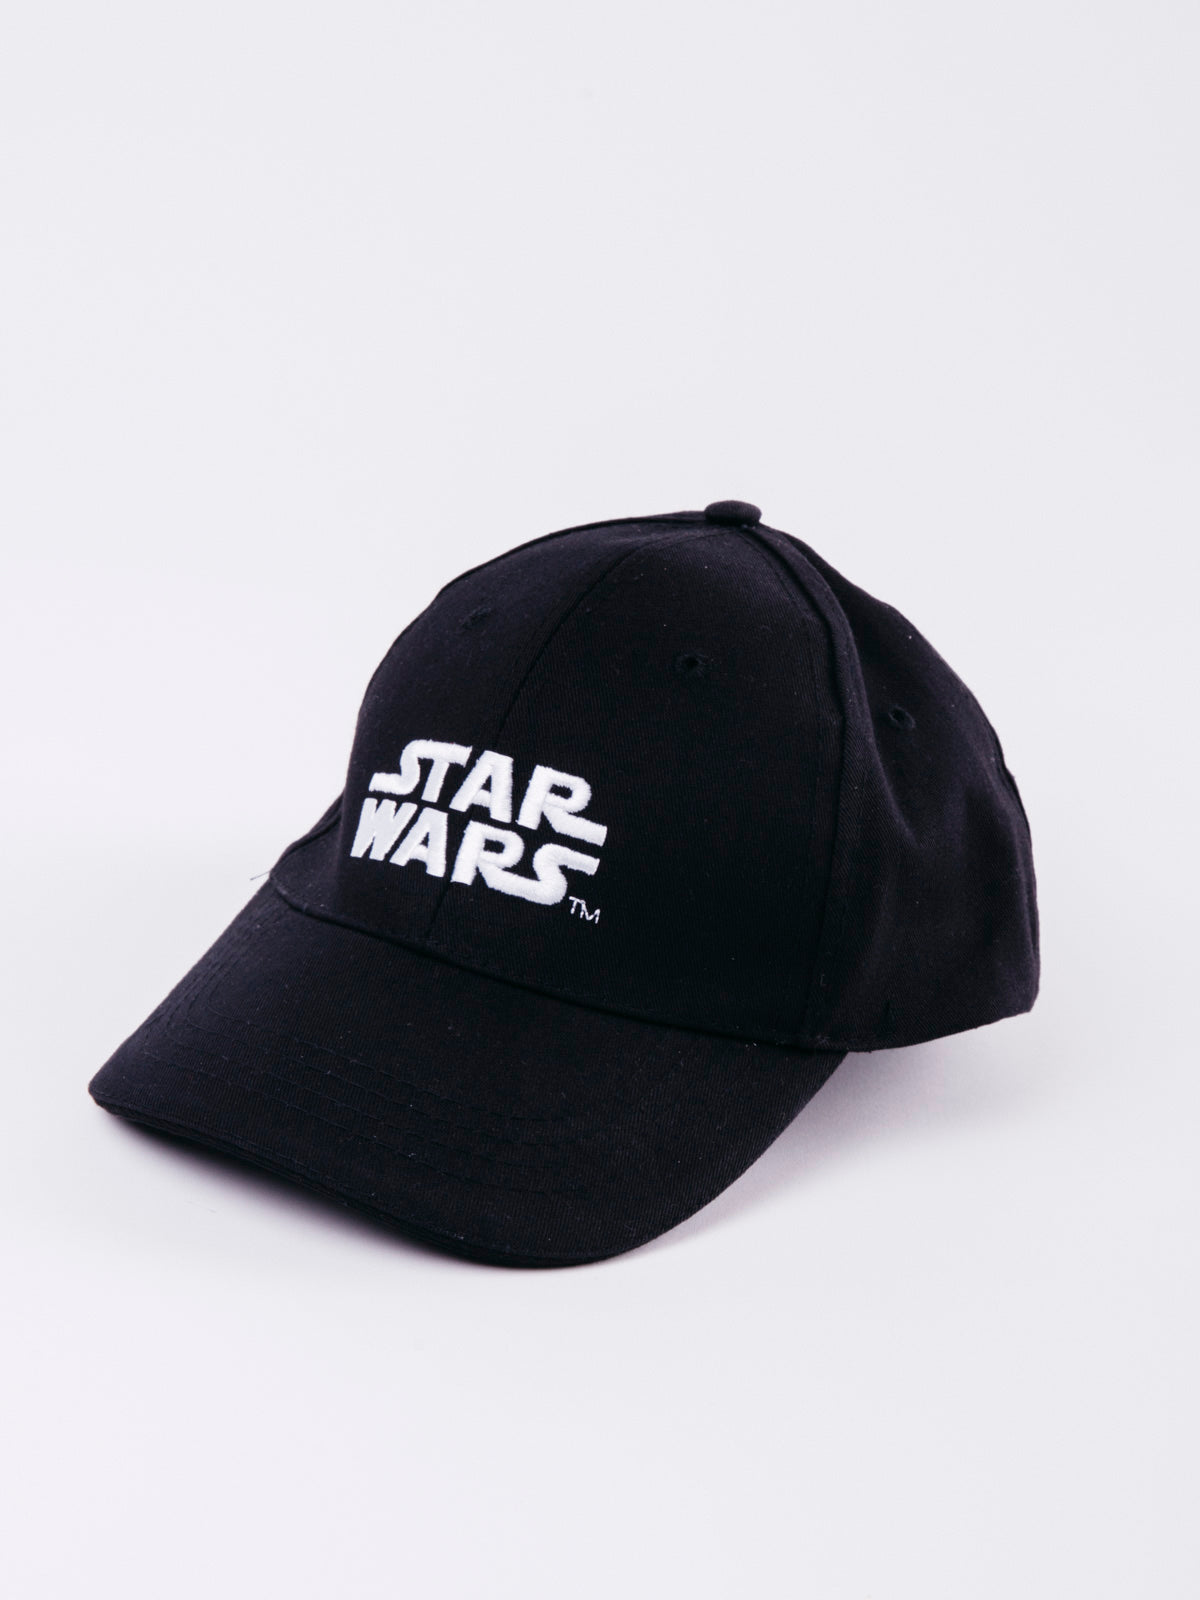 Star Wars Vintage Dad hat